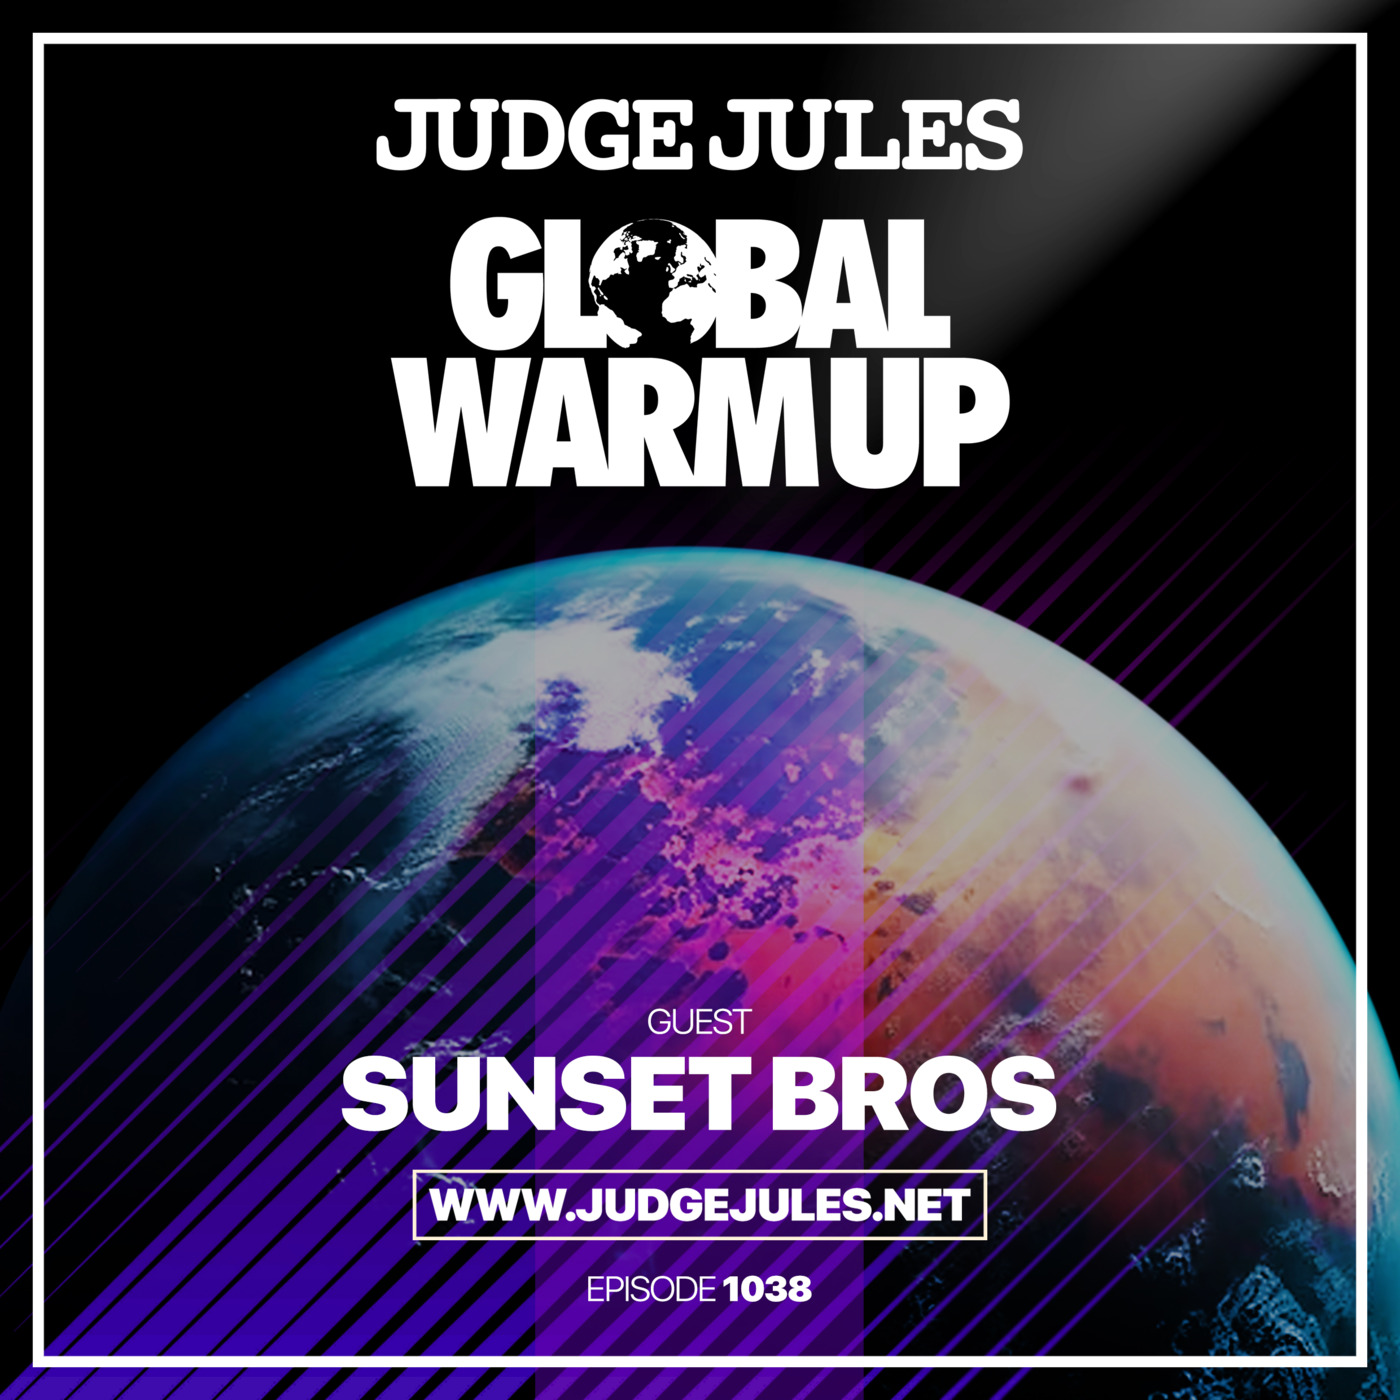 Episode 1038: JUDGE JULES PRESENTS THE GLOBAL WARM UP EPISODE 1038